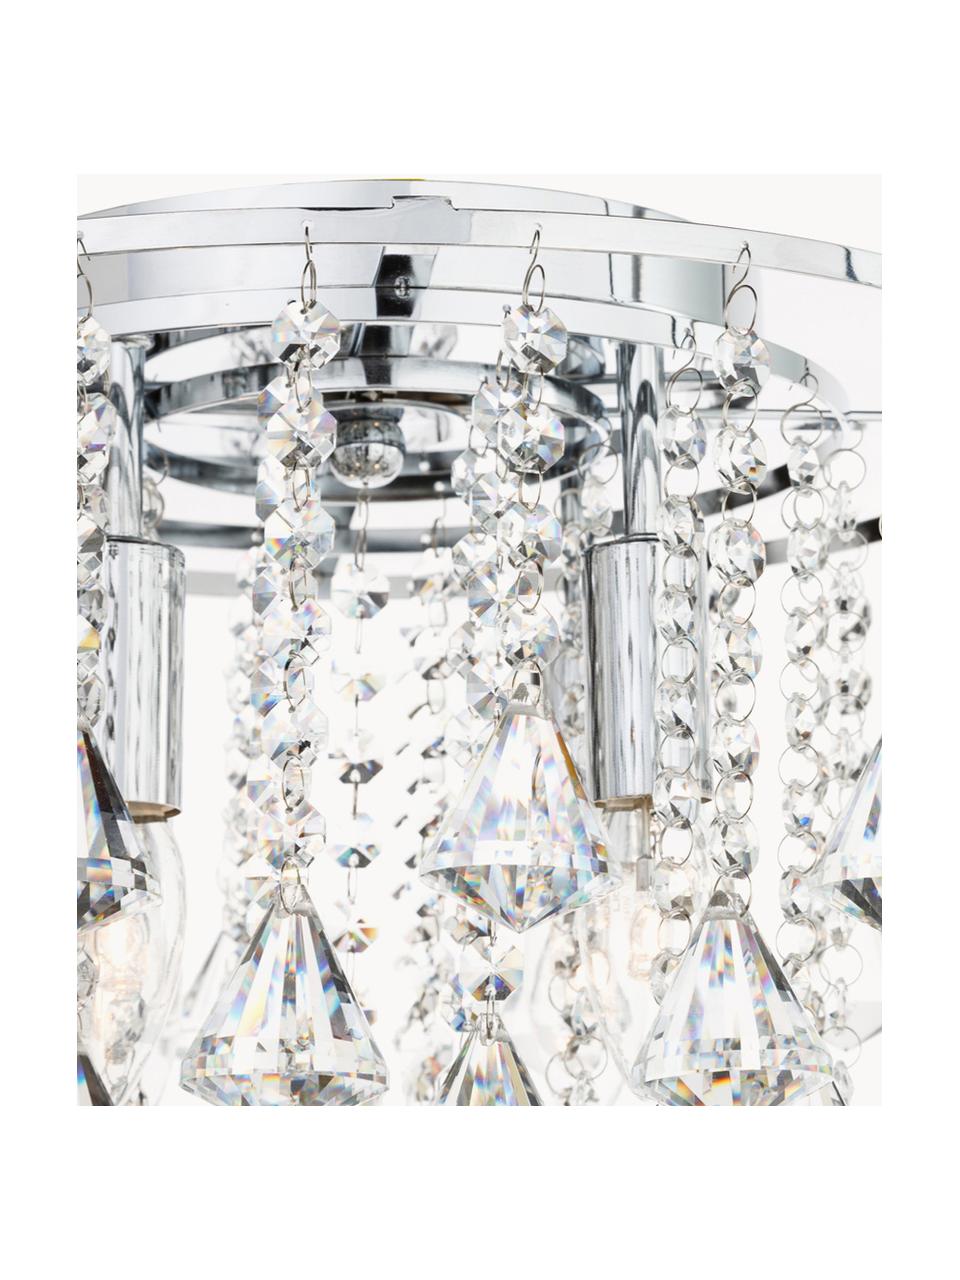 Lámpara araña de cristales Dorchester, Anclaje: metal cromado, Transparente, cromo, Ø 40 x Al 36 cm